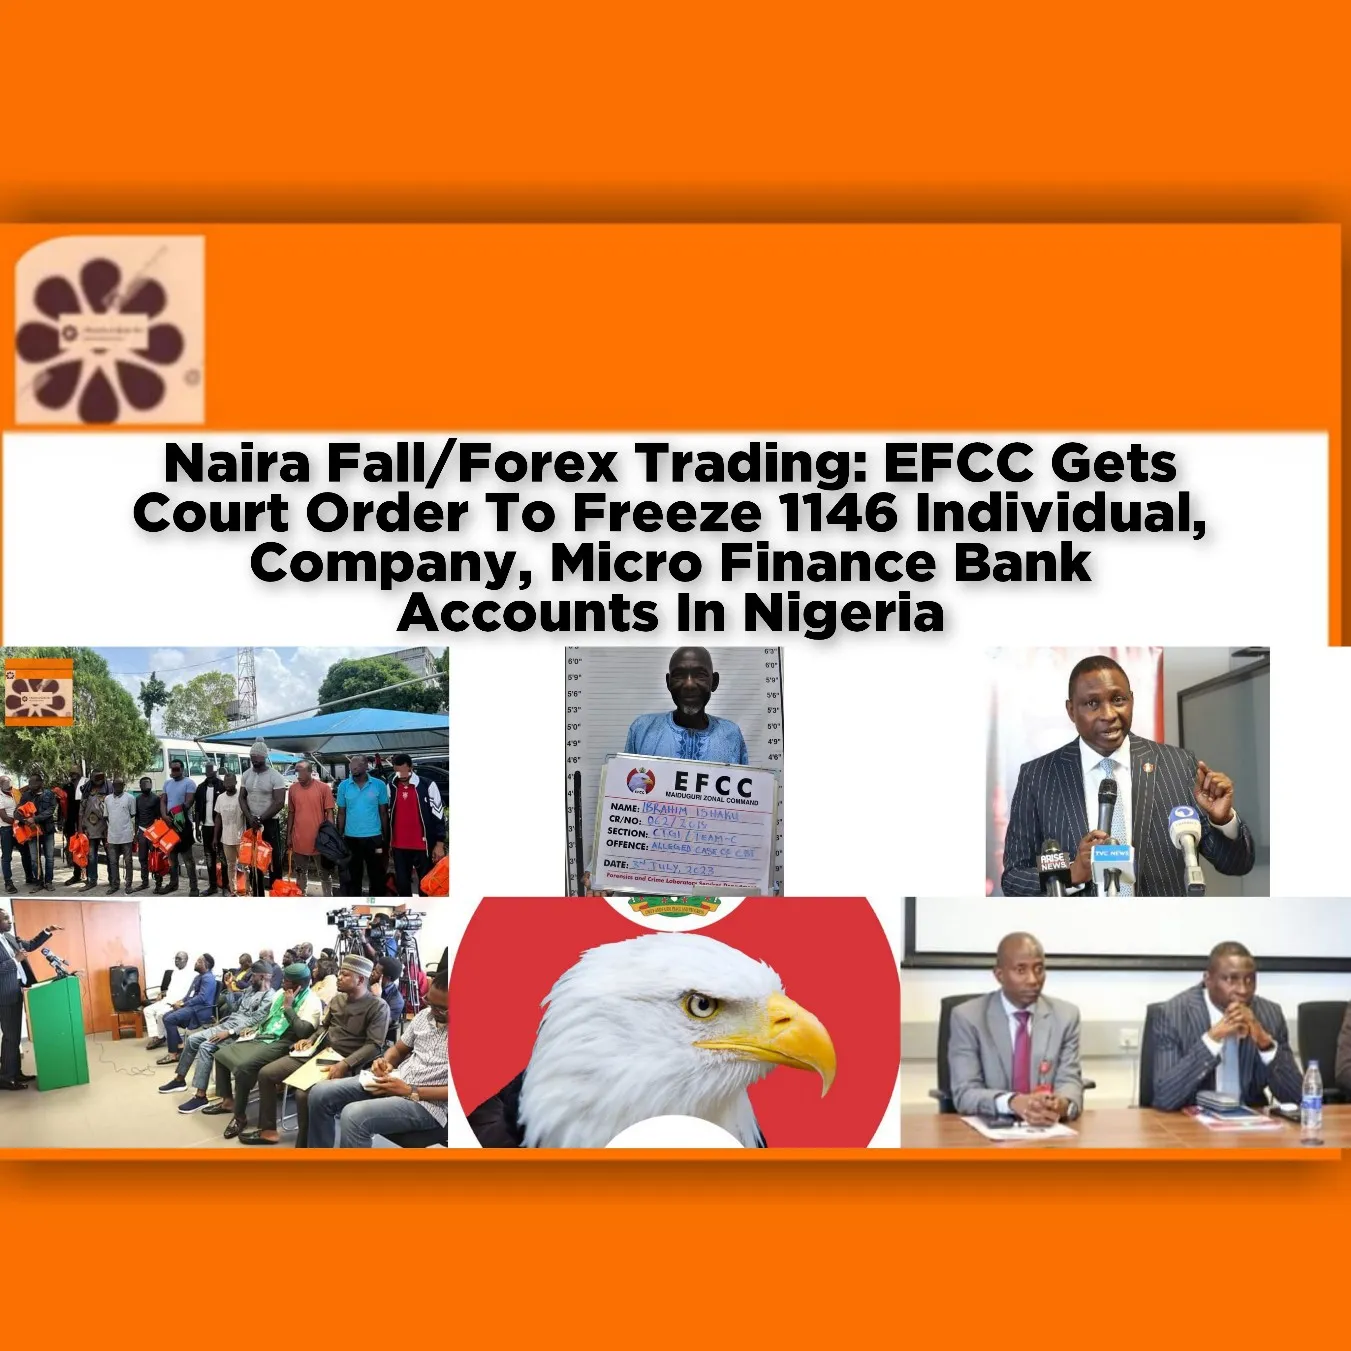 Naira Fall/Forex Trading: EFCC Gets Court Order To Freeze 1146 Individual, Company, Micro Finance Bank Accounts In Nigeria ~ OsazuwaAkonedo #banks #Dollar #EFCC #Finance #Forex #Laundering #Micro #Money #Naira #Terrorism